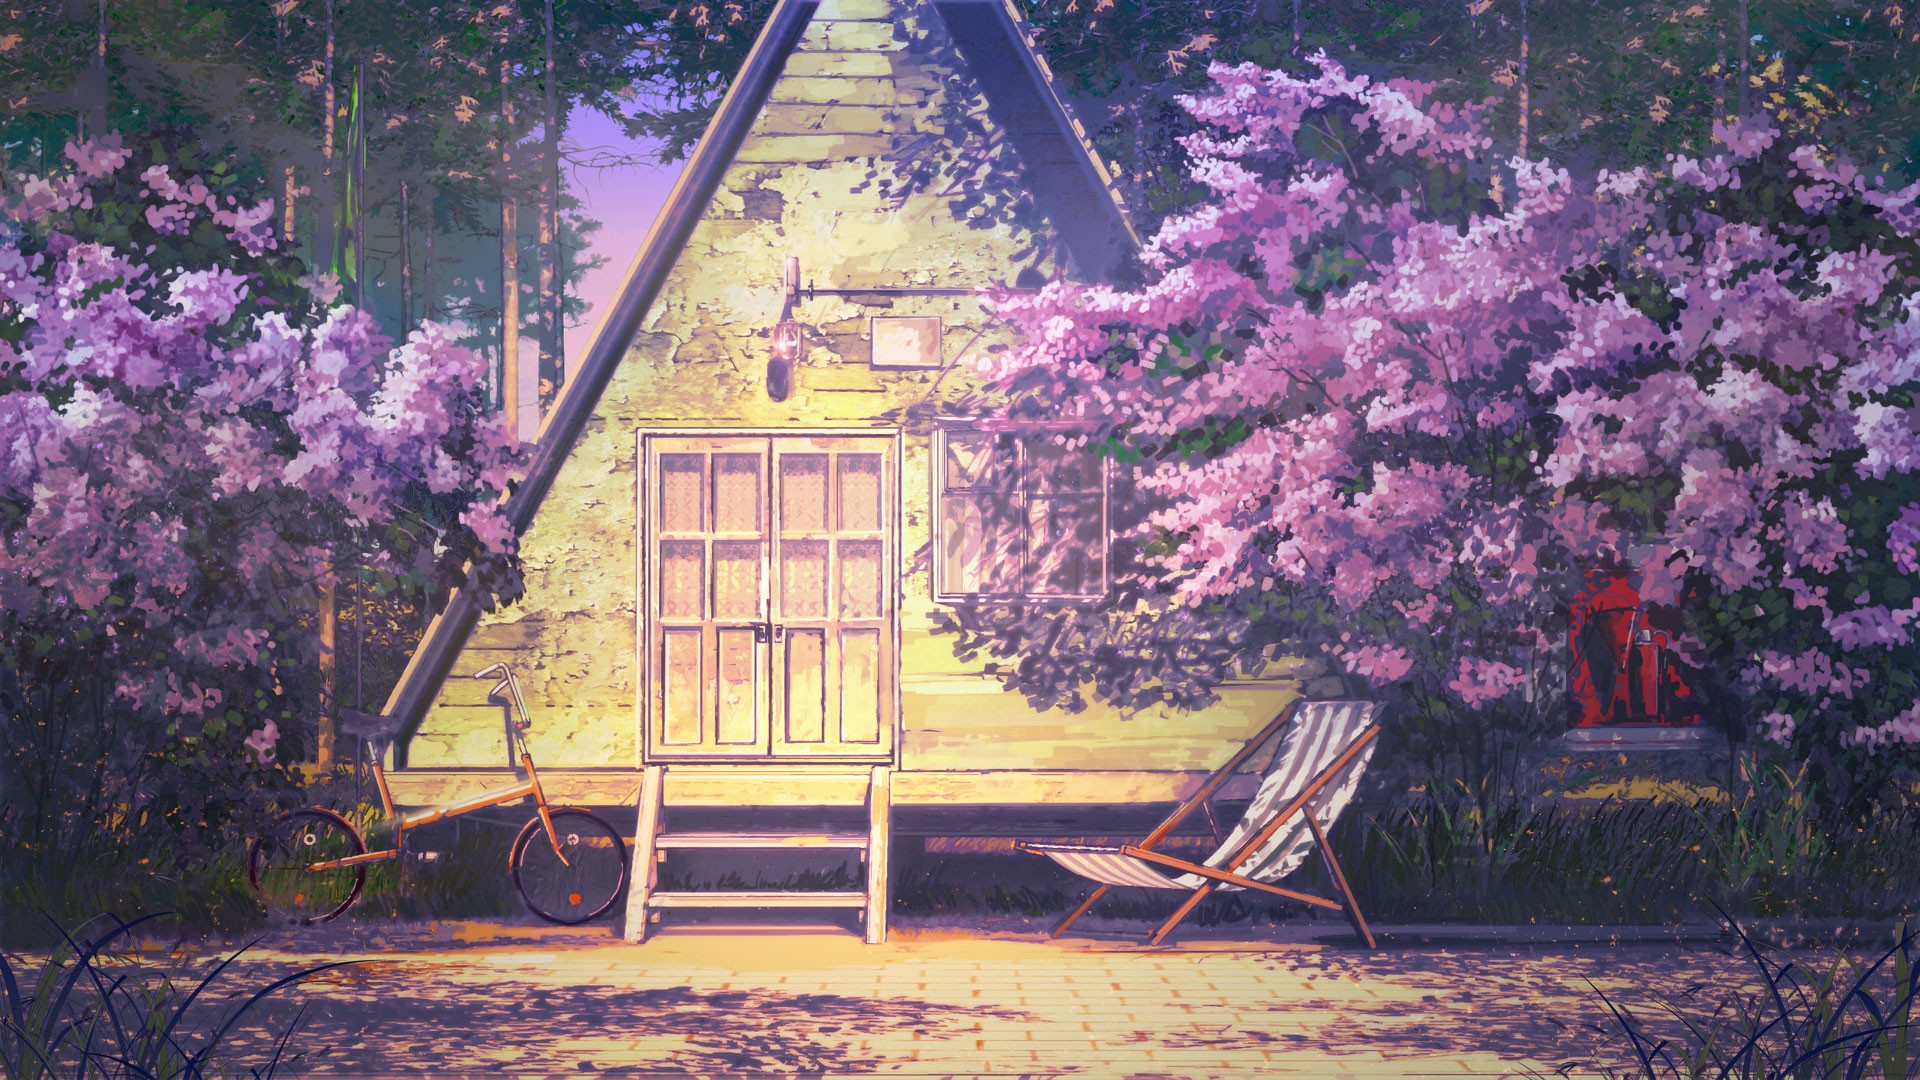 General 1920x1080 Everlasting Summer (visual novel) bicycle red purple triangle hammocks ArseniXC frontal view anime vehicle trees chair house digital art